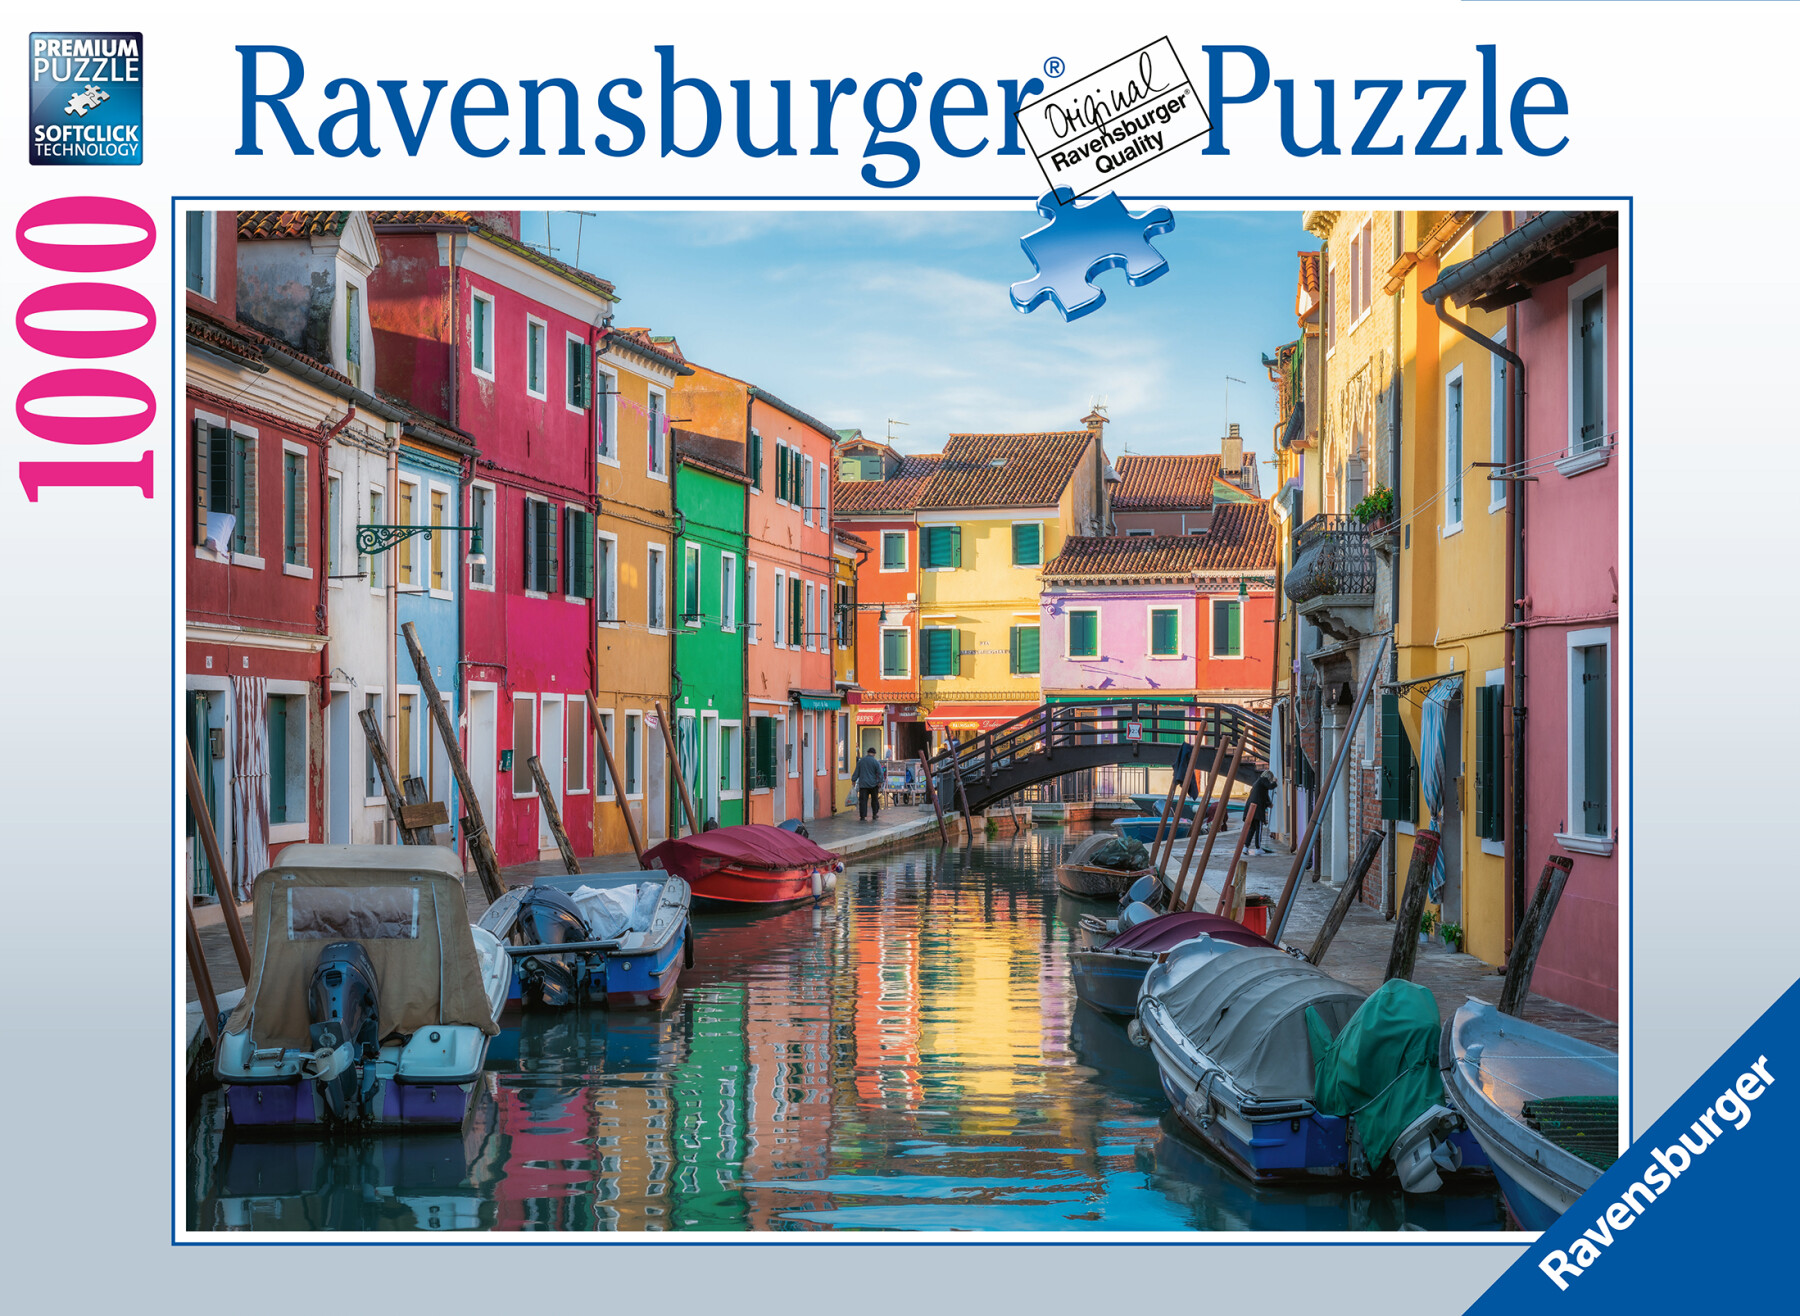 Ravensburger - puzzle burano, italia, 1000 pezzi, puzzle adulti - RAVENSBURGER